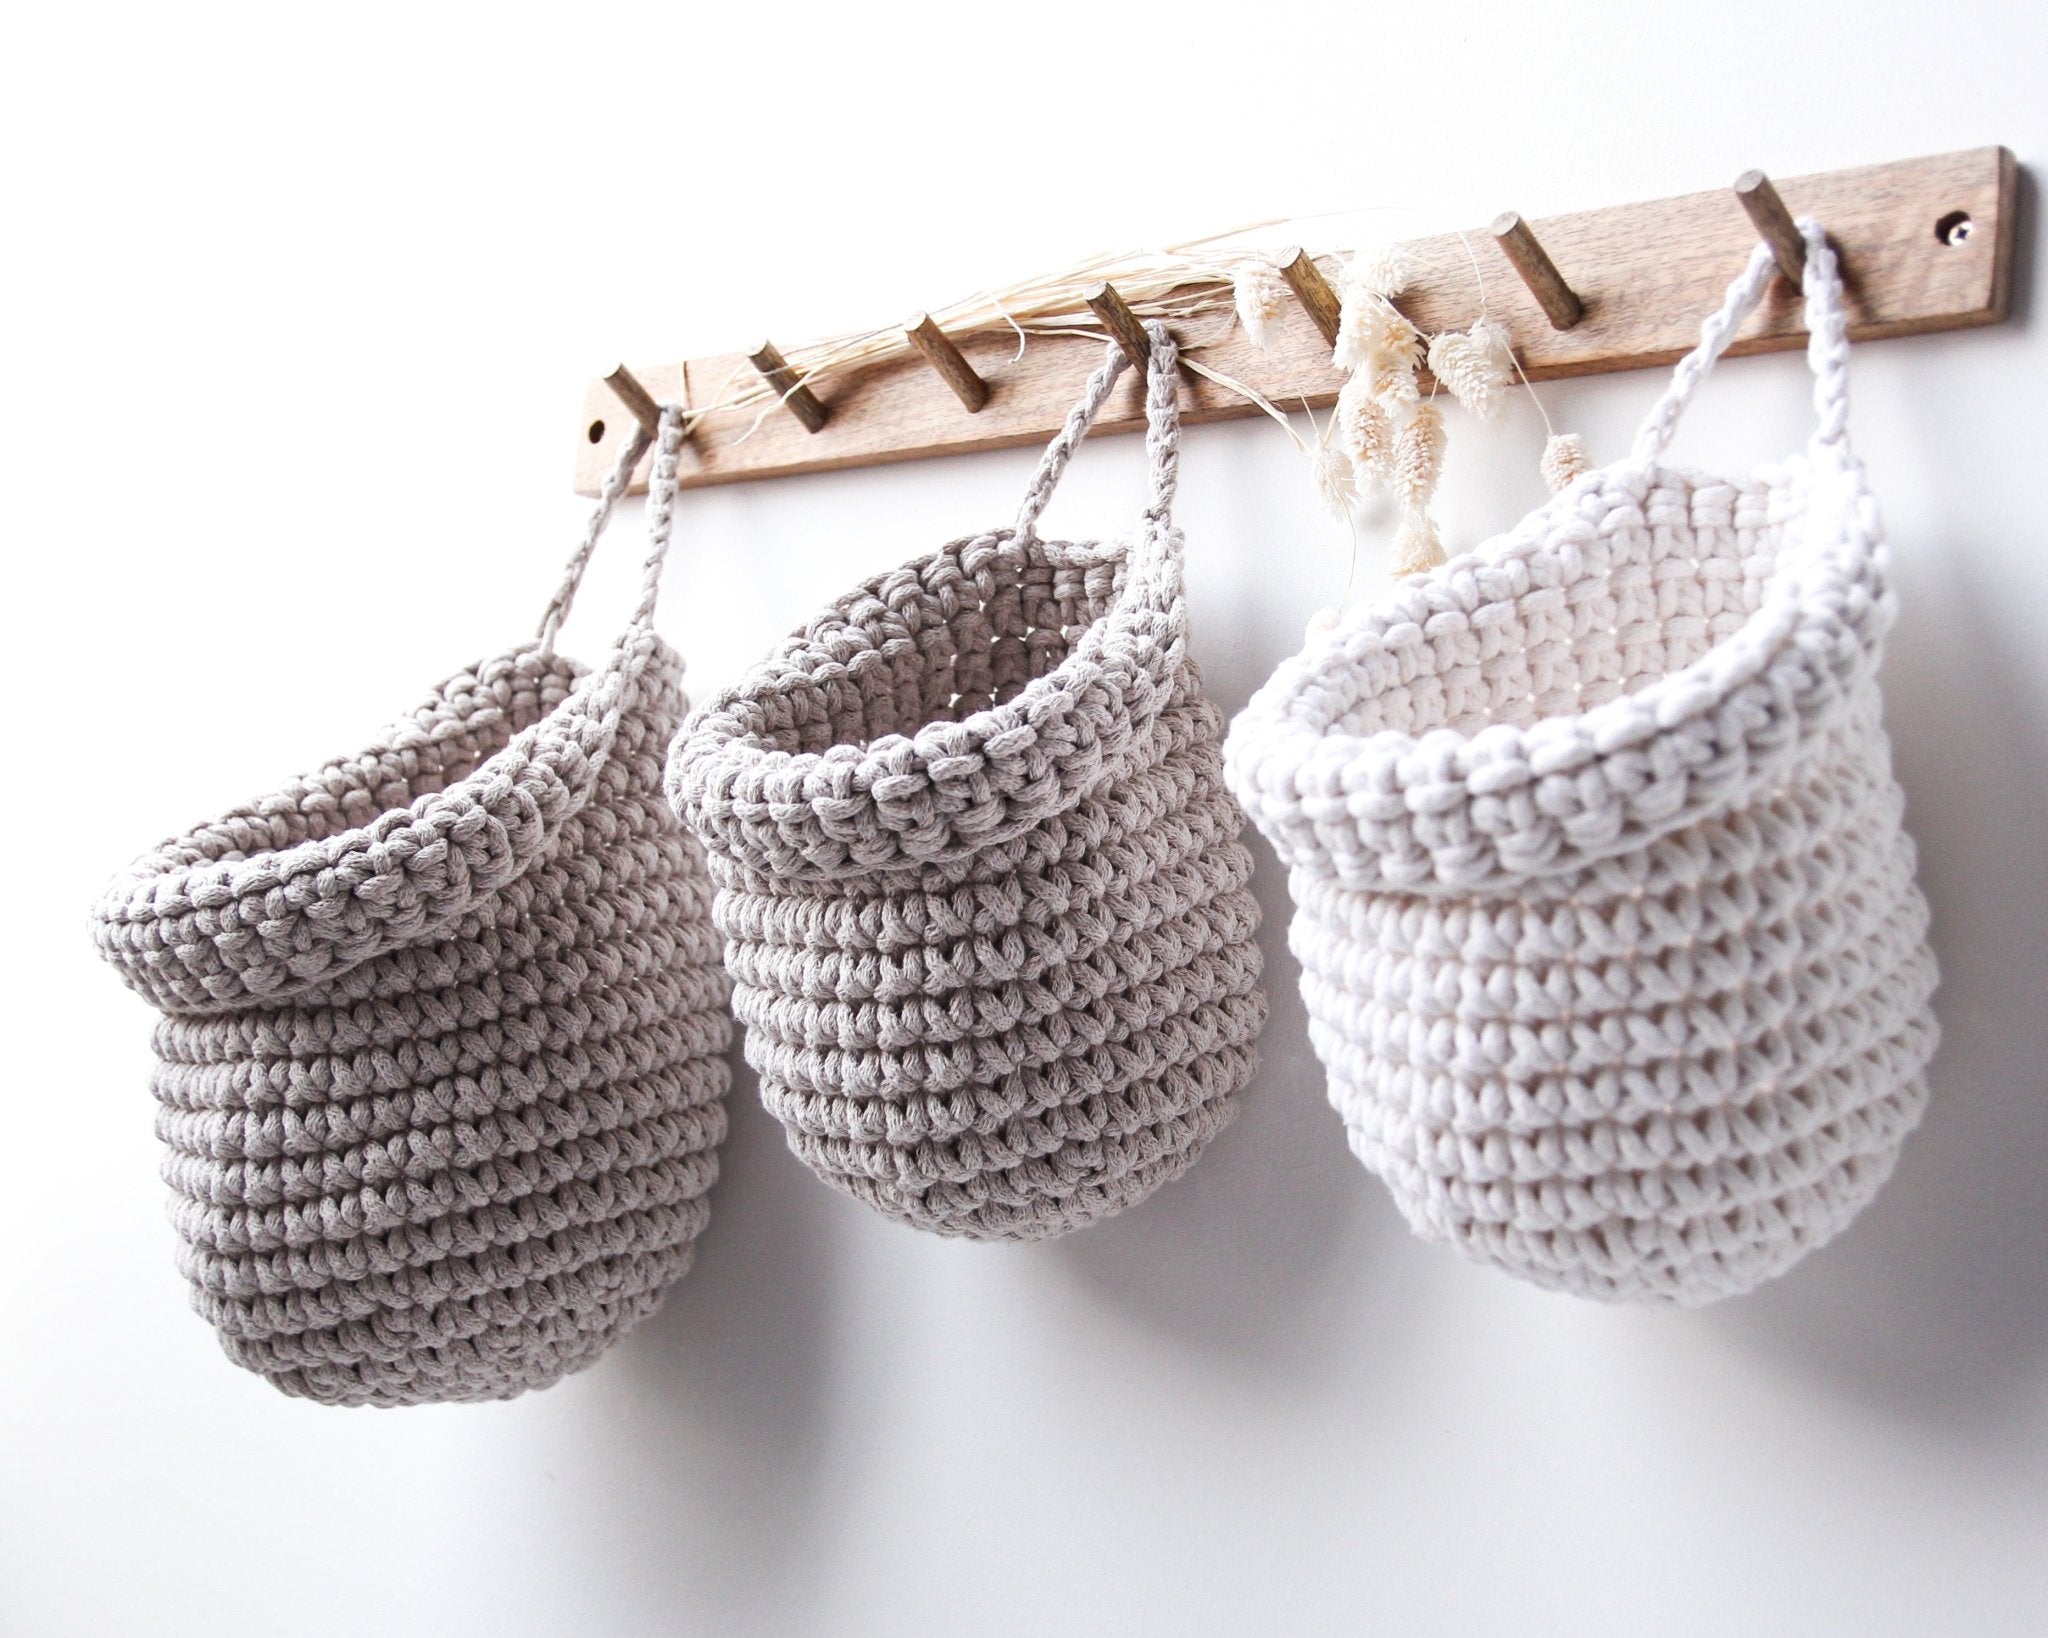 Crochet Hanging Bags - Zuri House